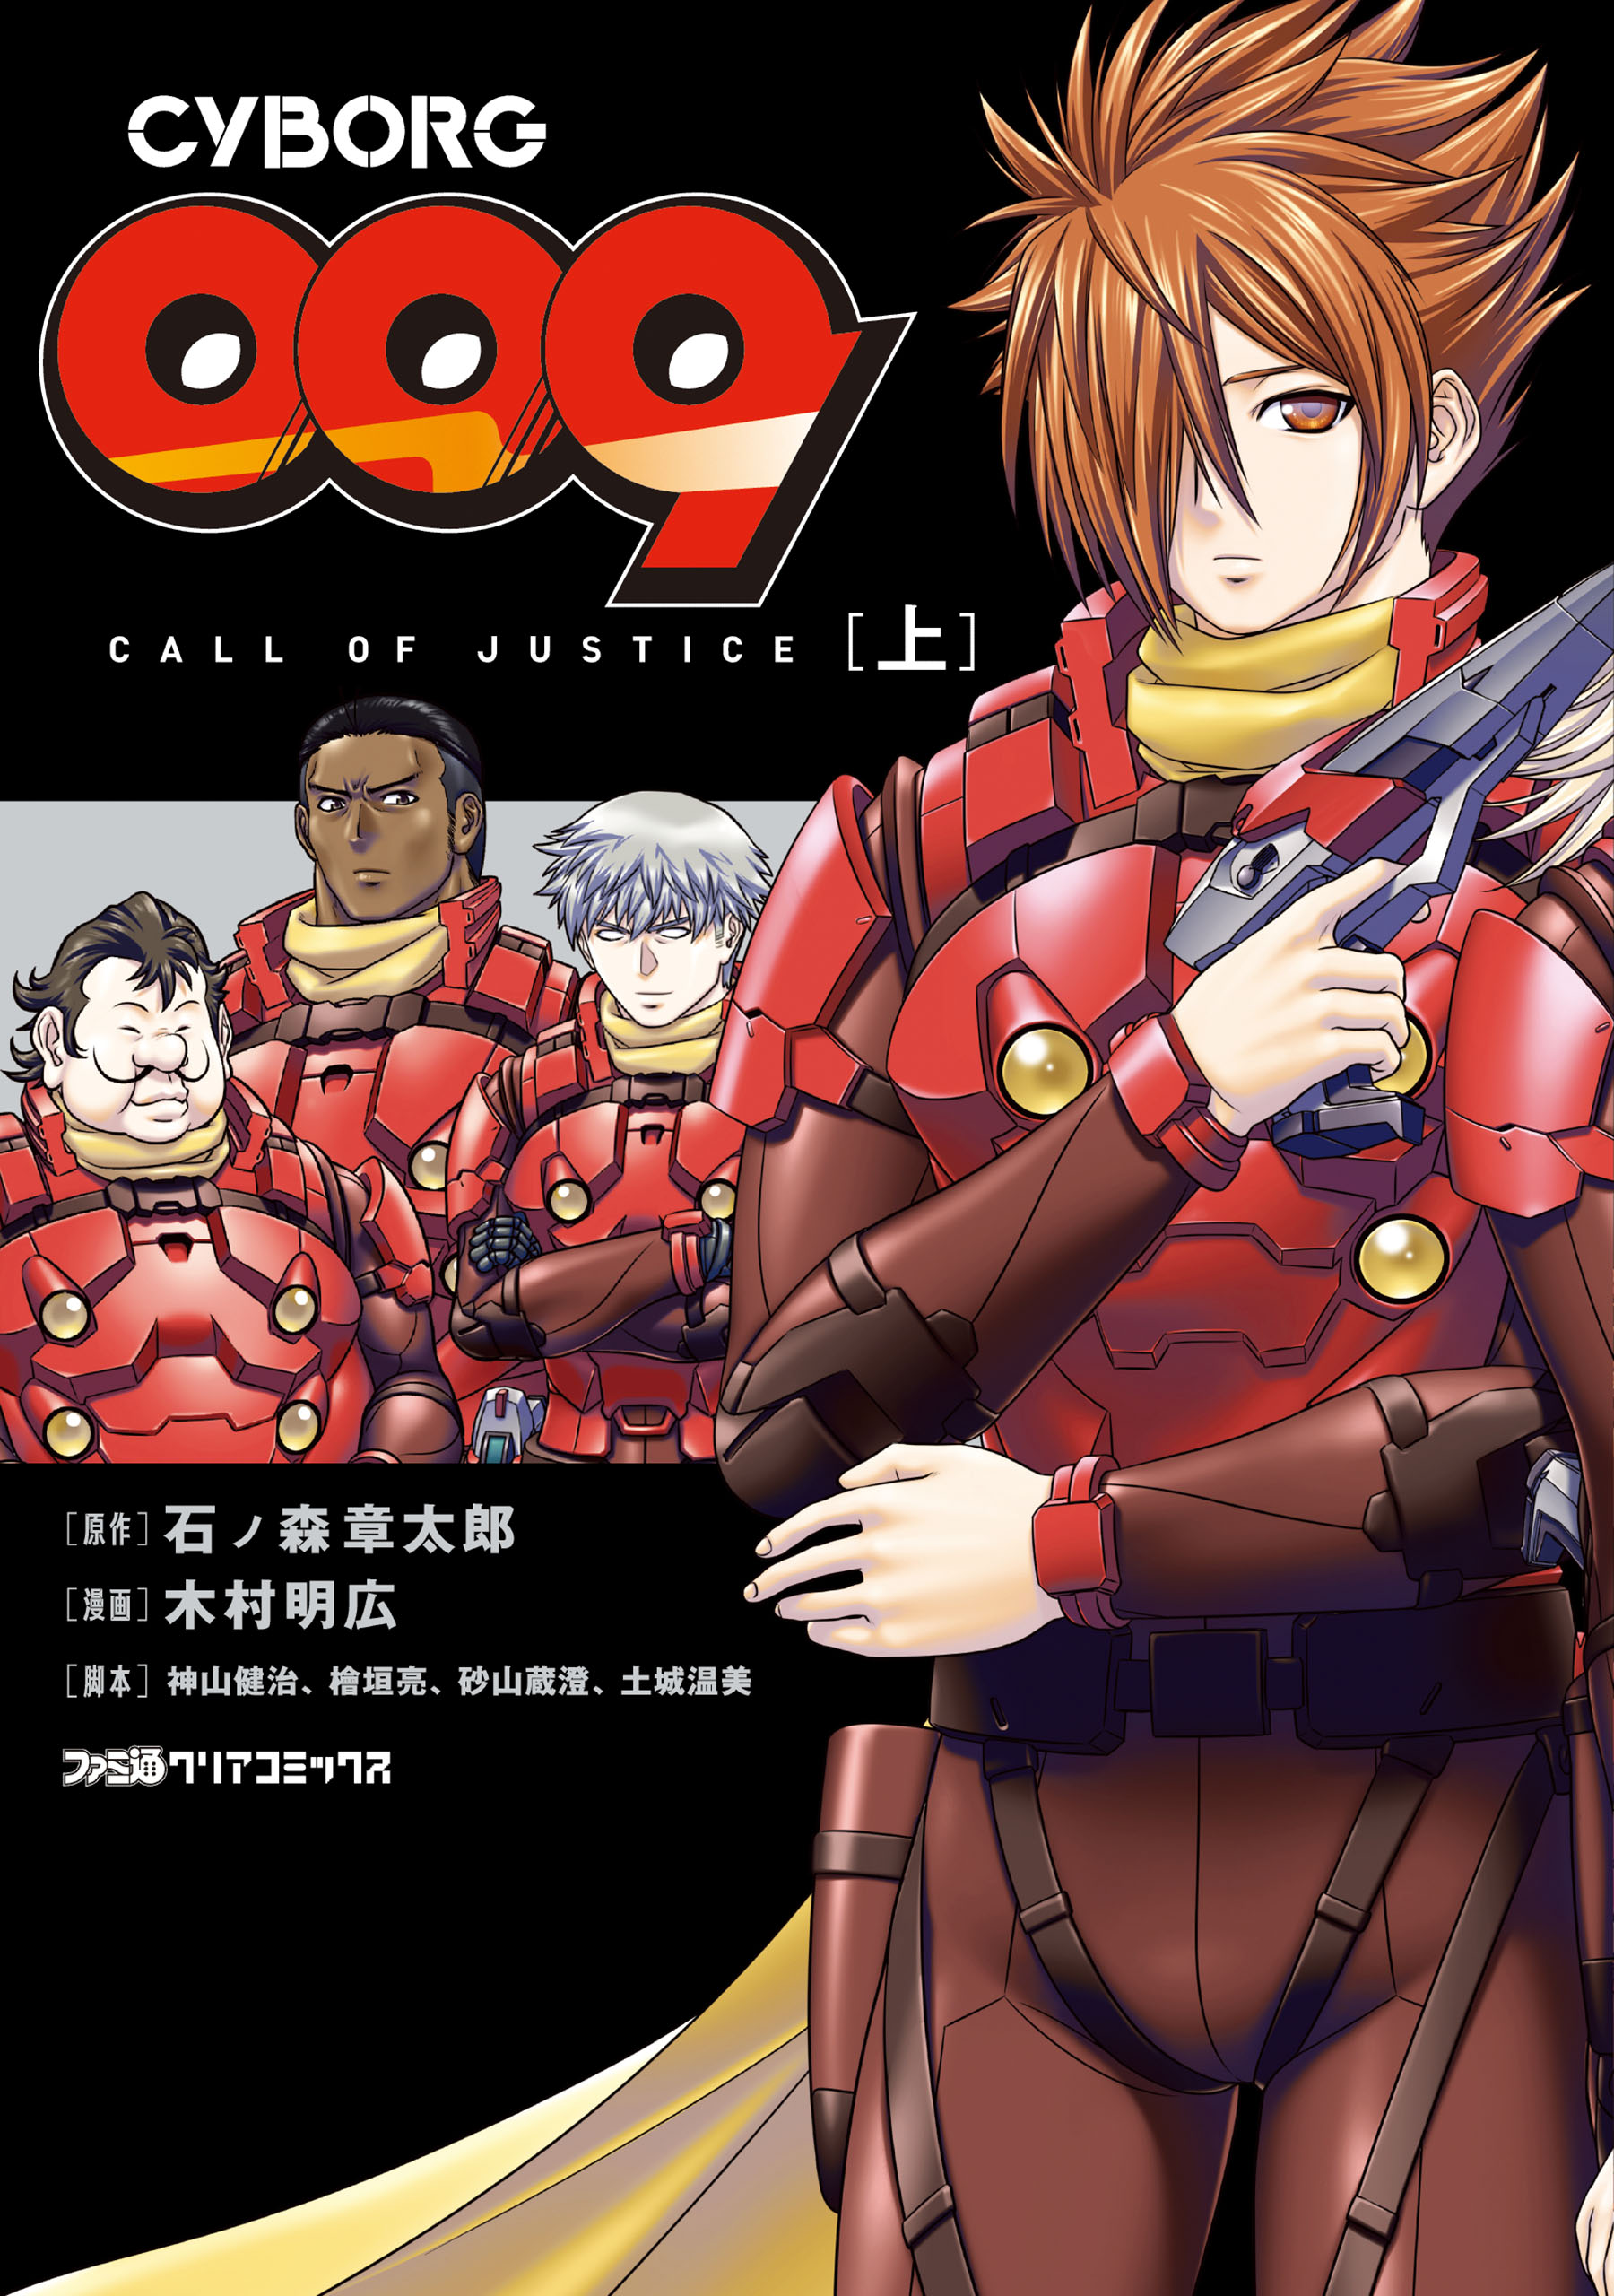 CYBORG009 CALL OF JUSTICE ［上］ - 石ノ森章太郎/木村明広 - 漫画